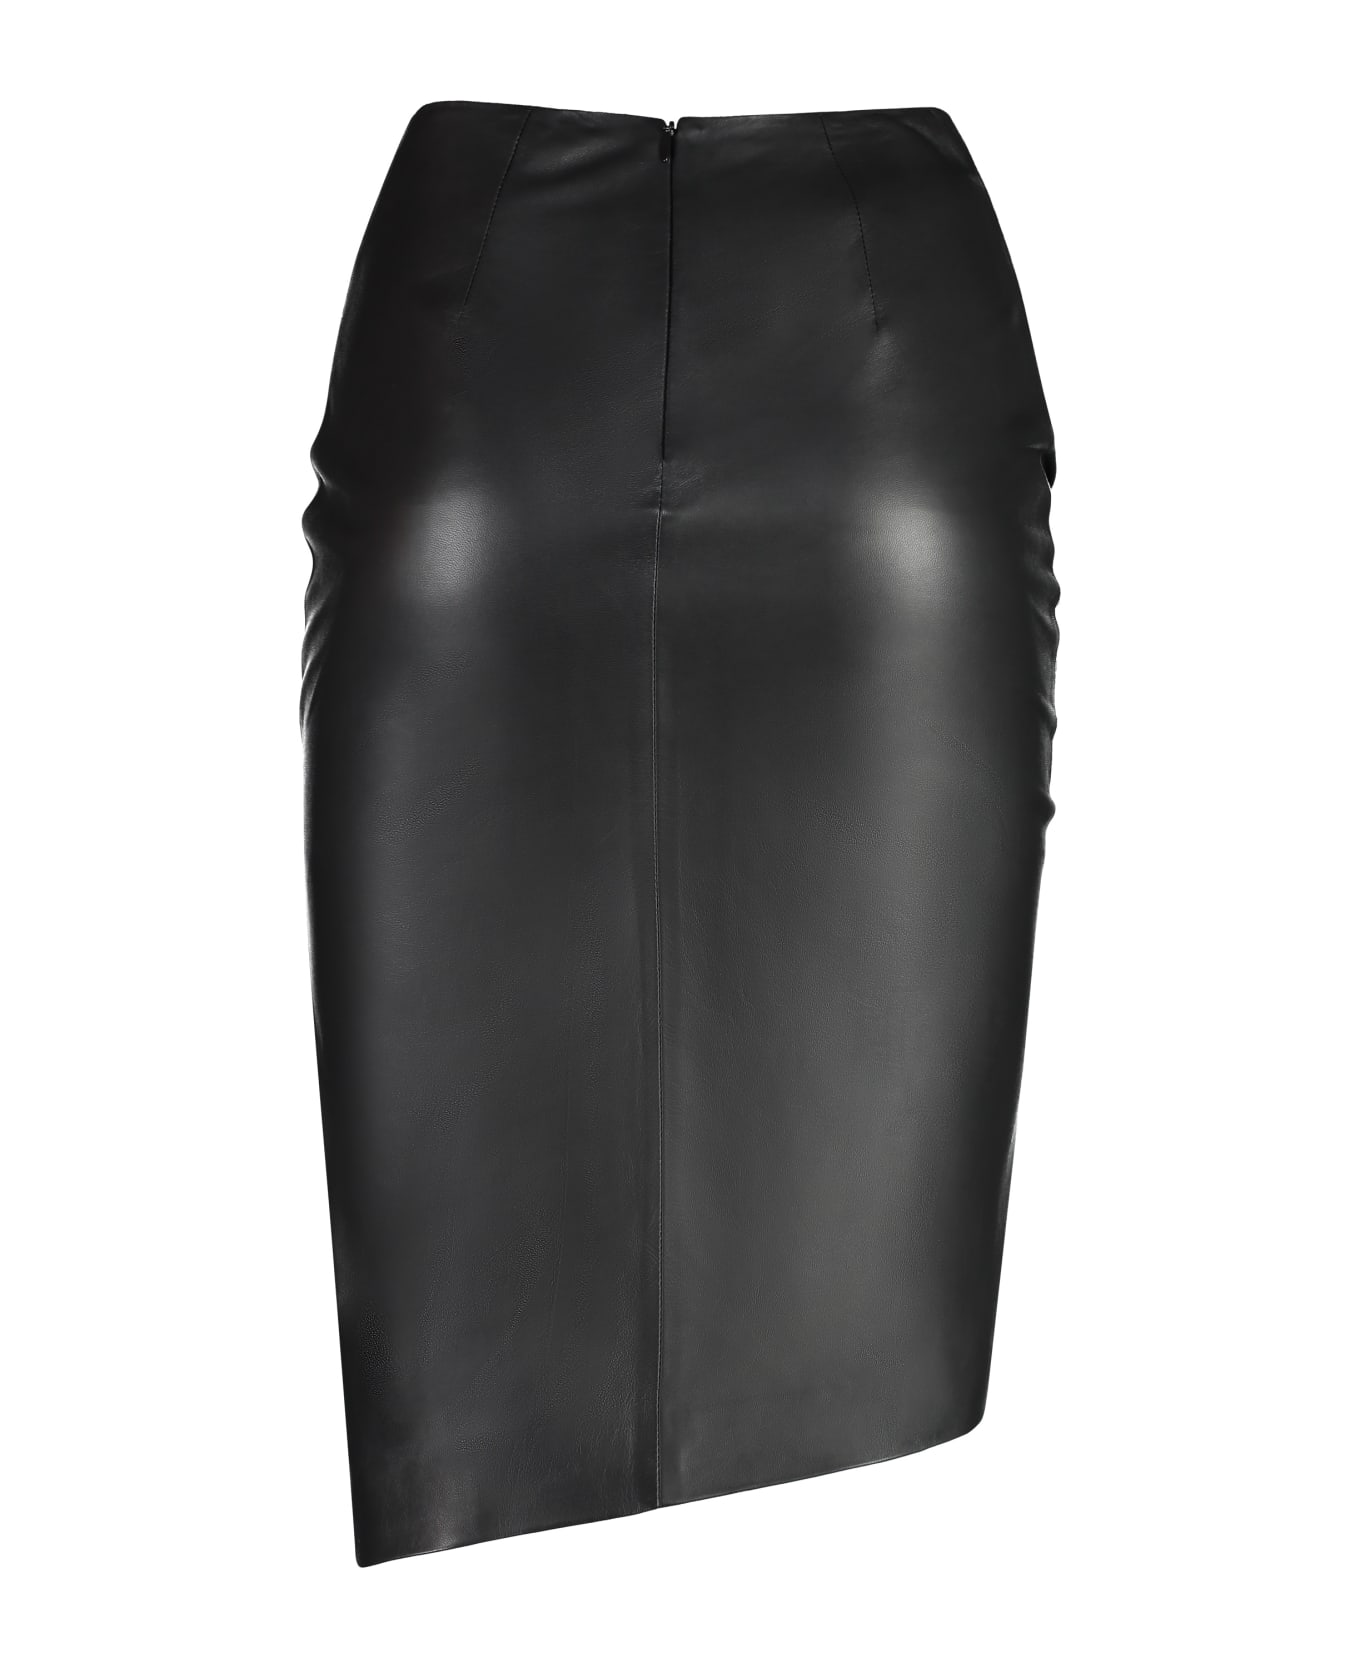 ANDREĀDAMO Leather Skirt - black